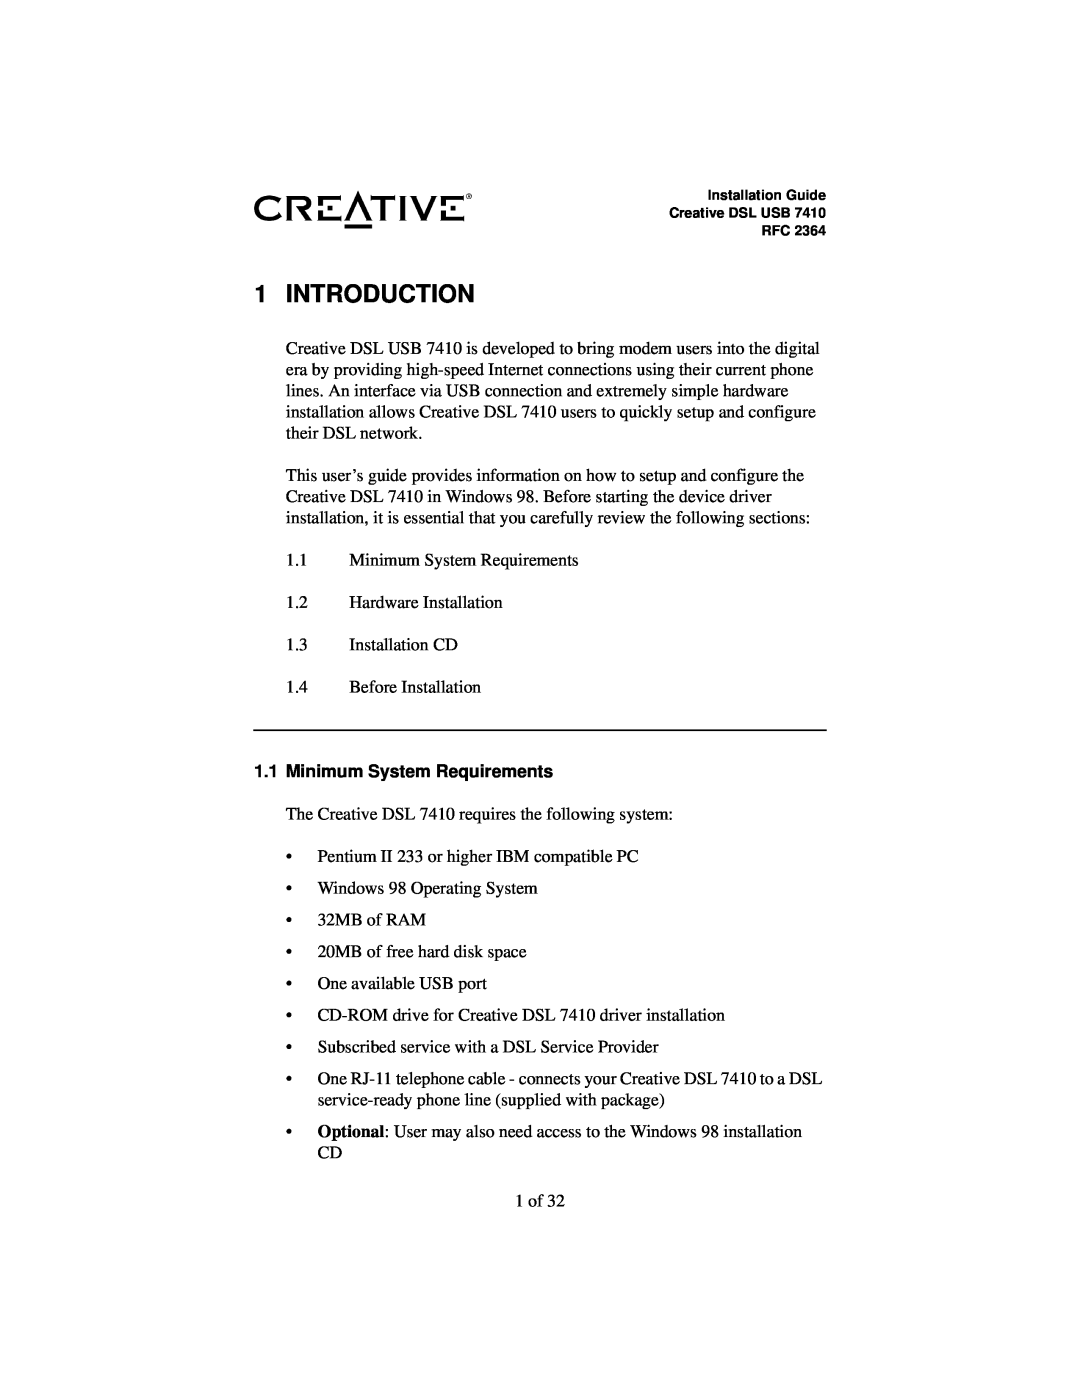 Creative RFC 2364 appendix Introduction, Minimum System Requirements 